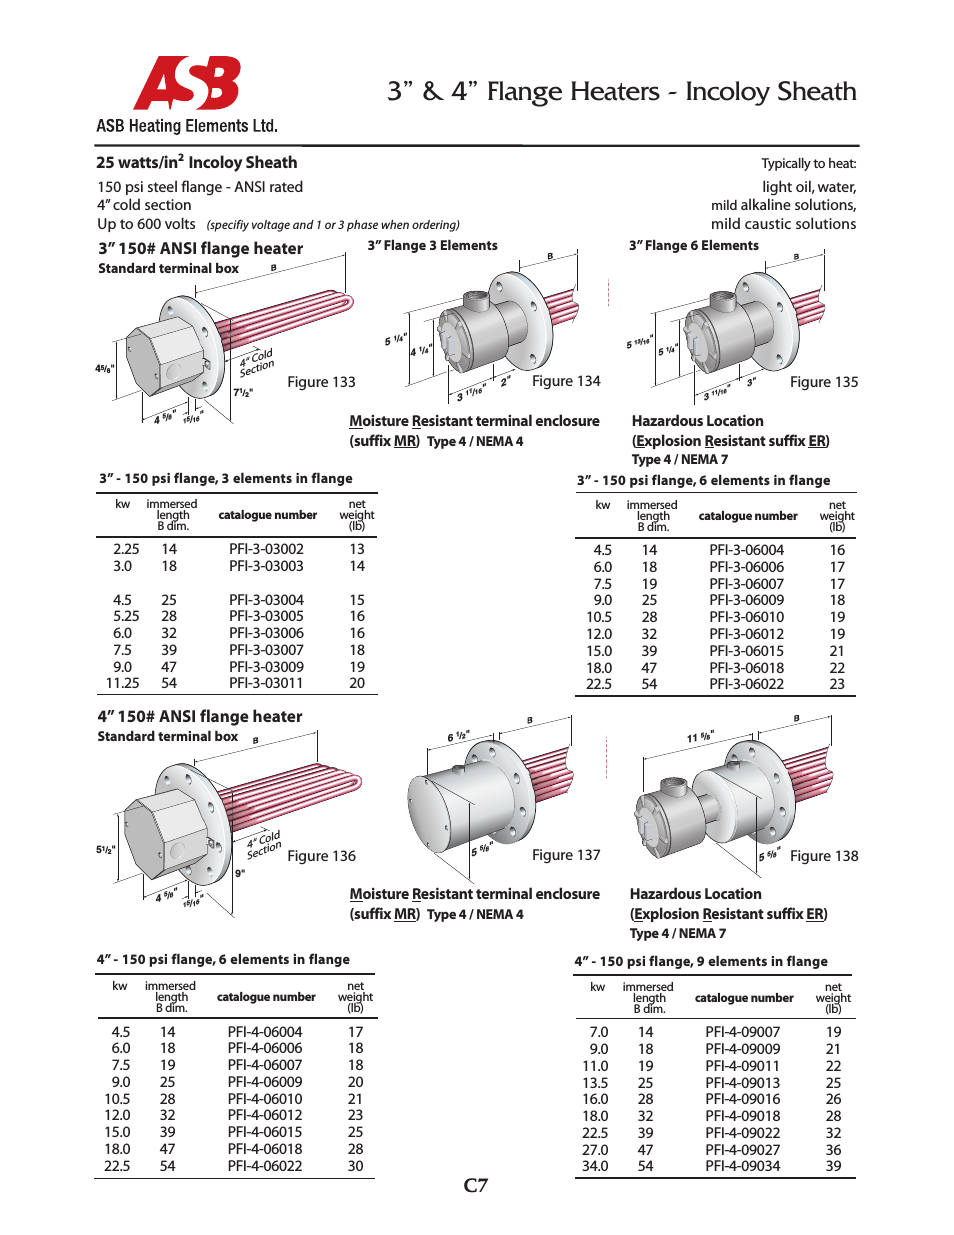 3” & 4” Flange Heaters - 25 watts - Incoloy Sheath